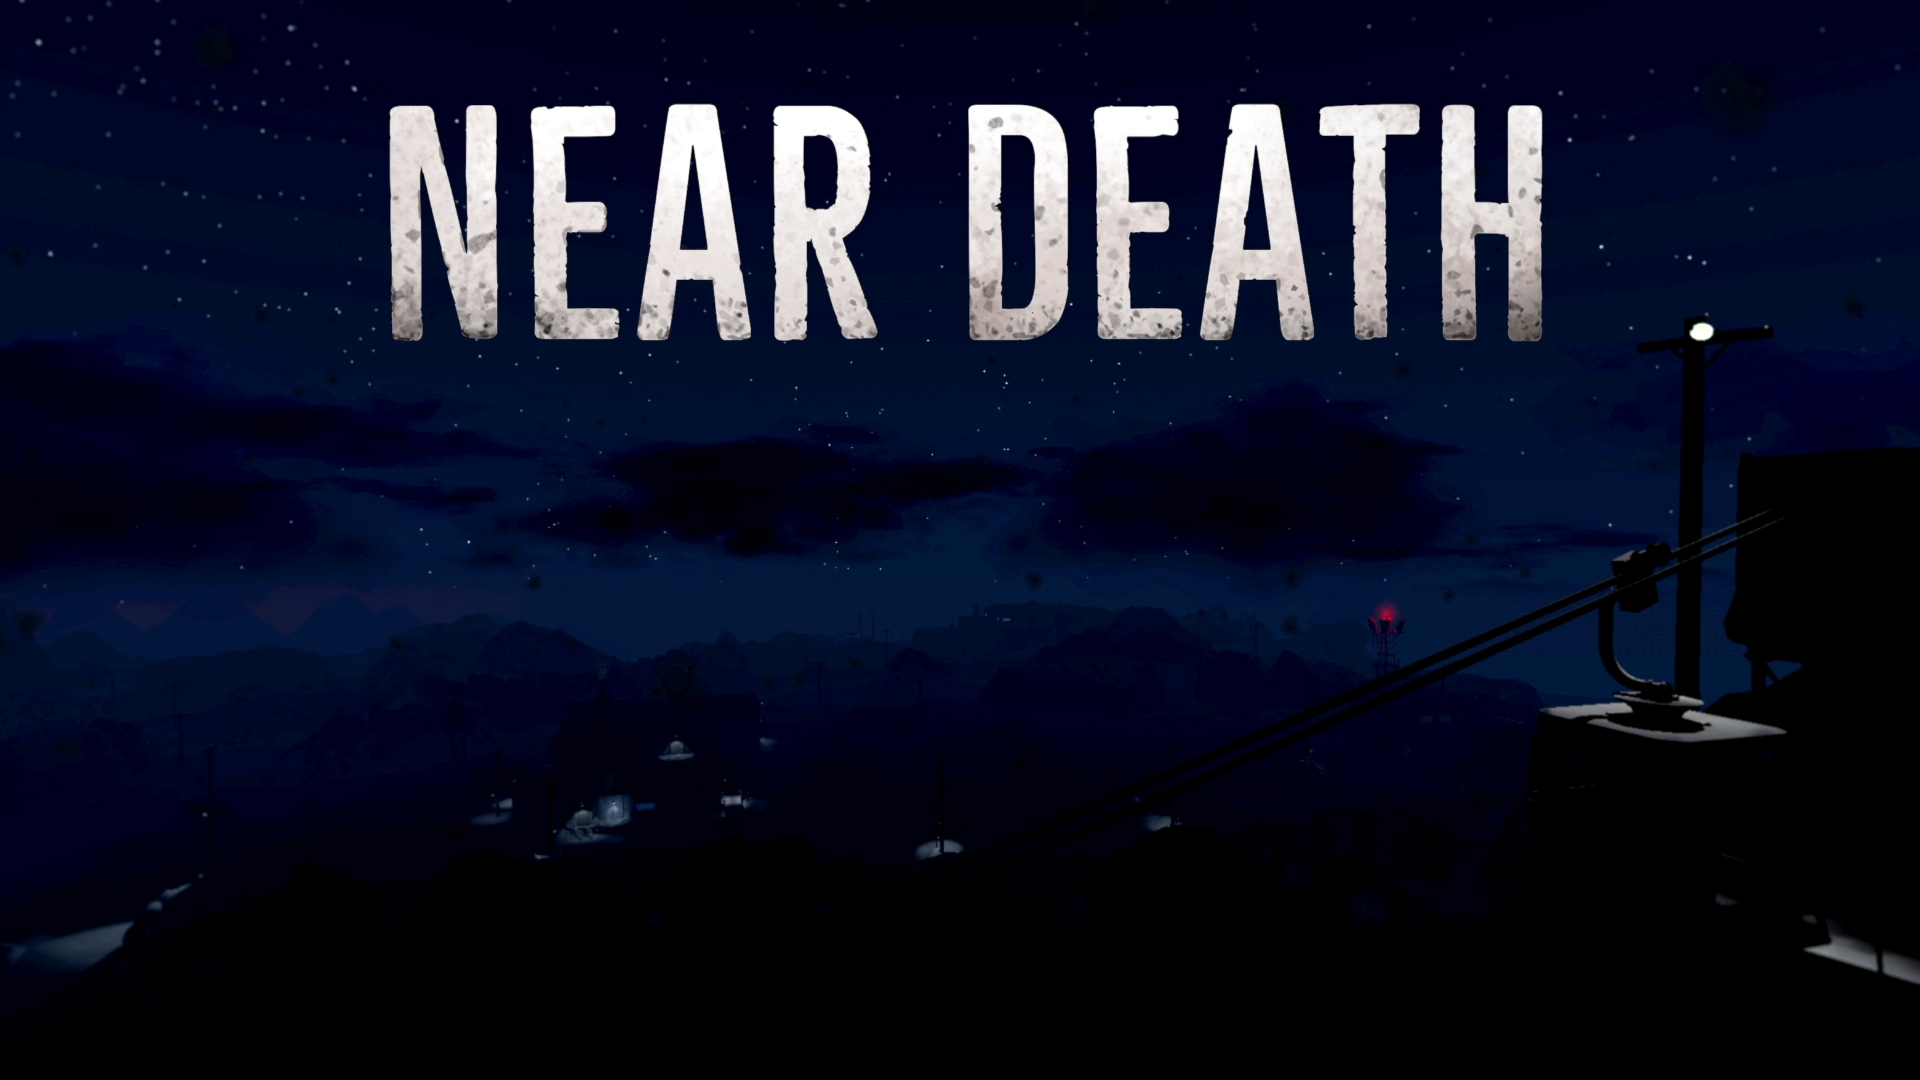 Let’s Play Near Death (Steam)